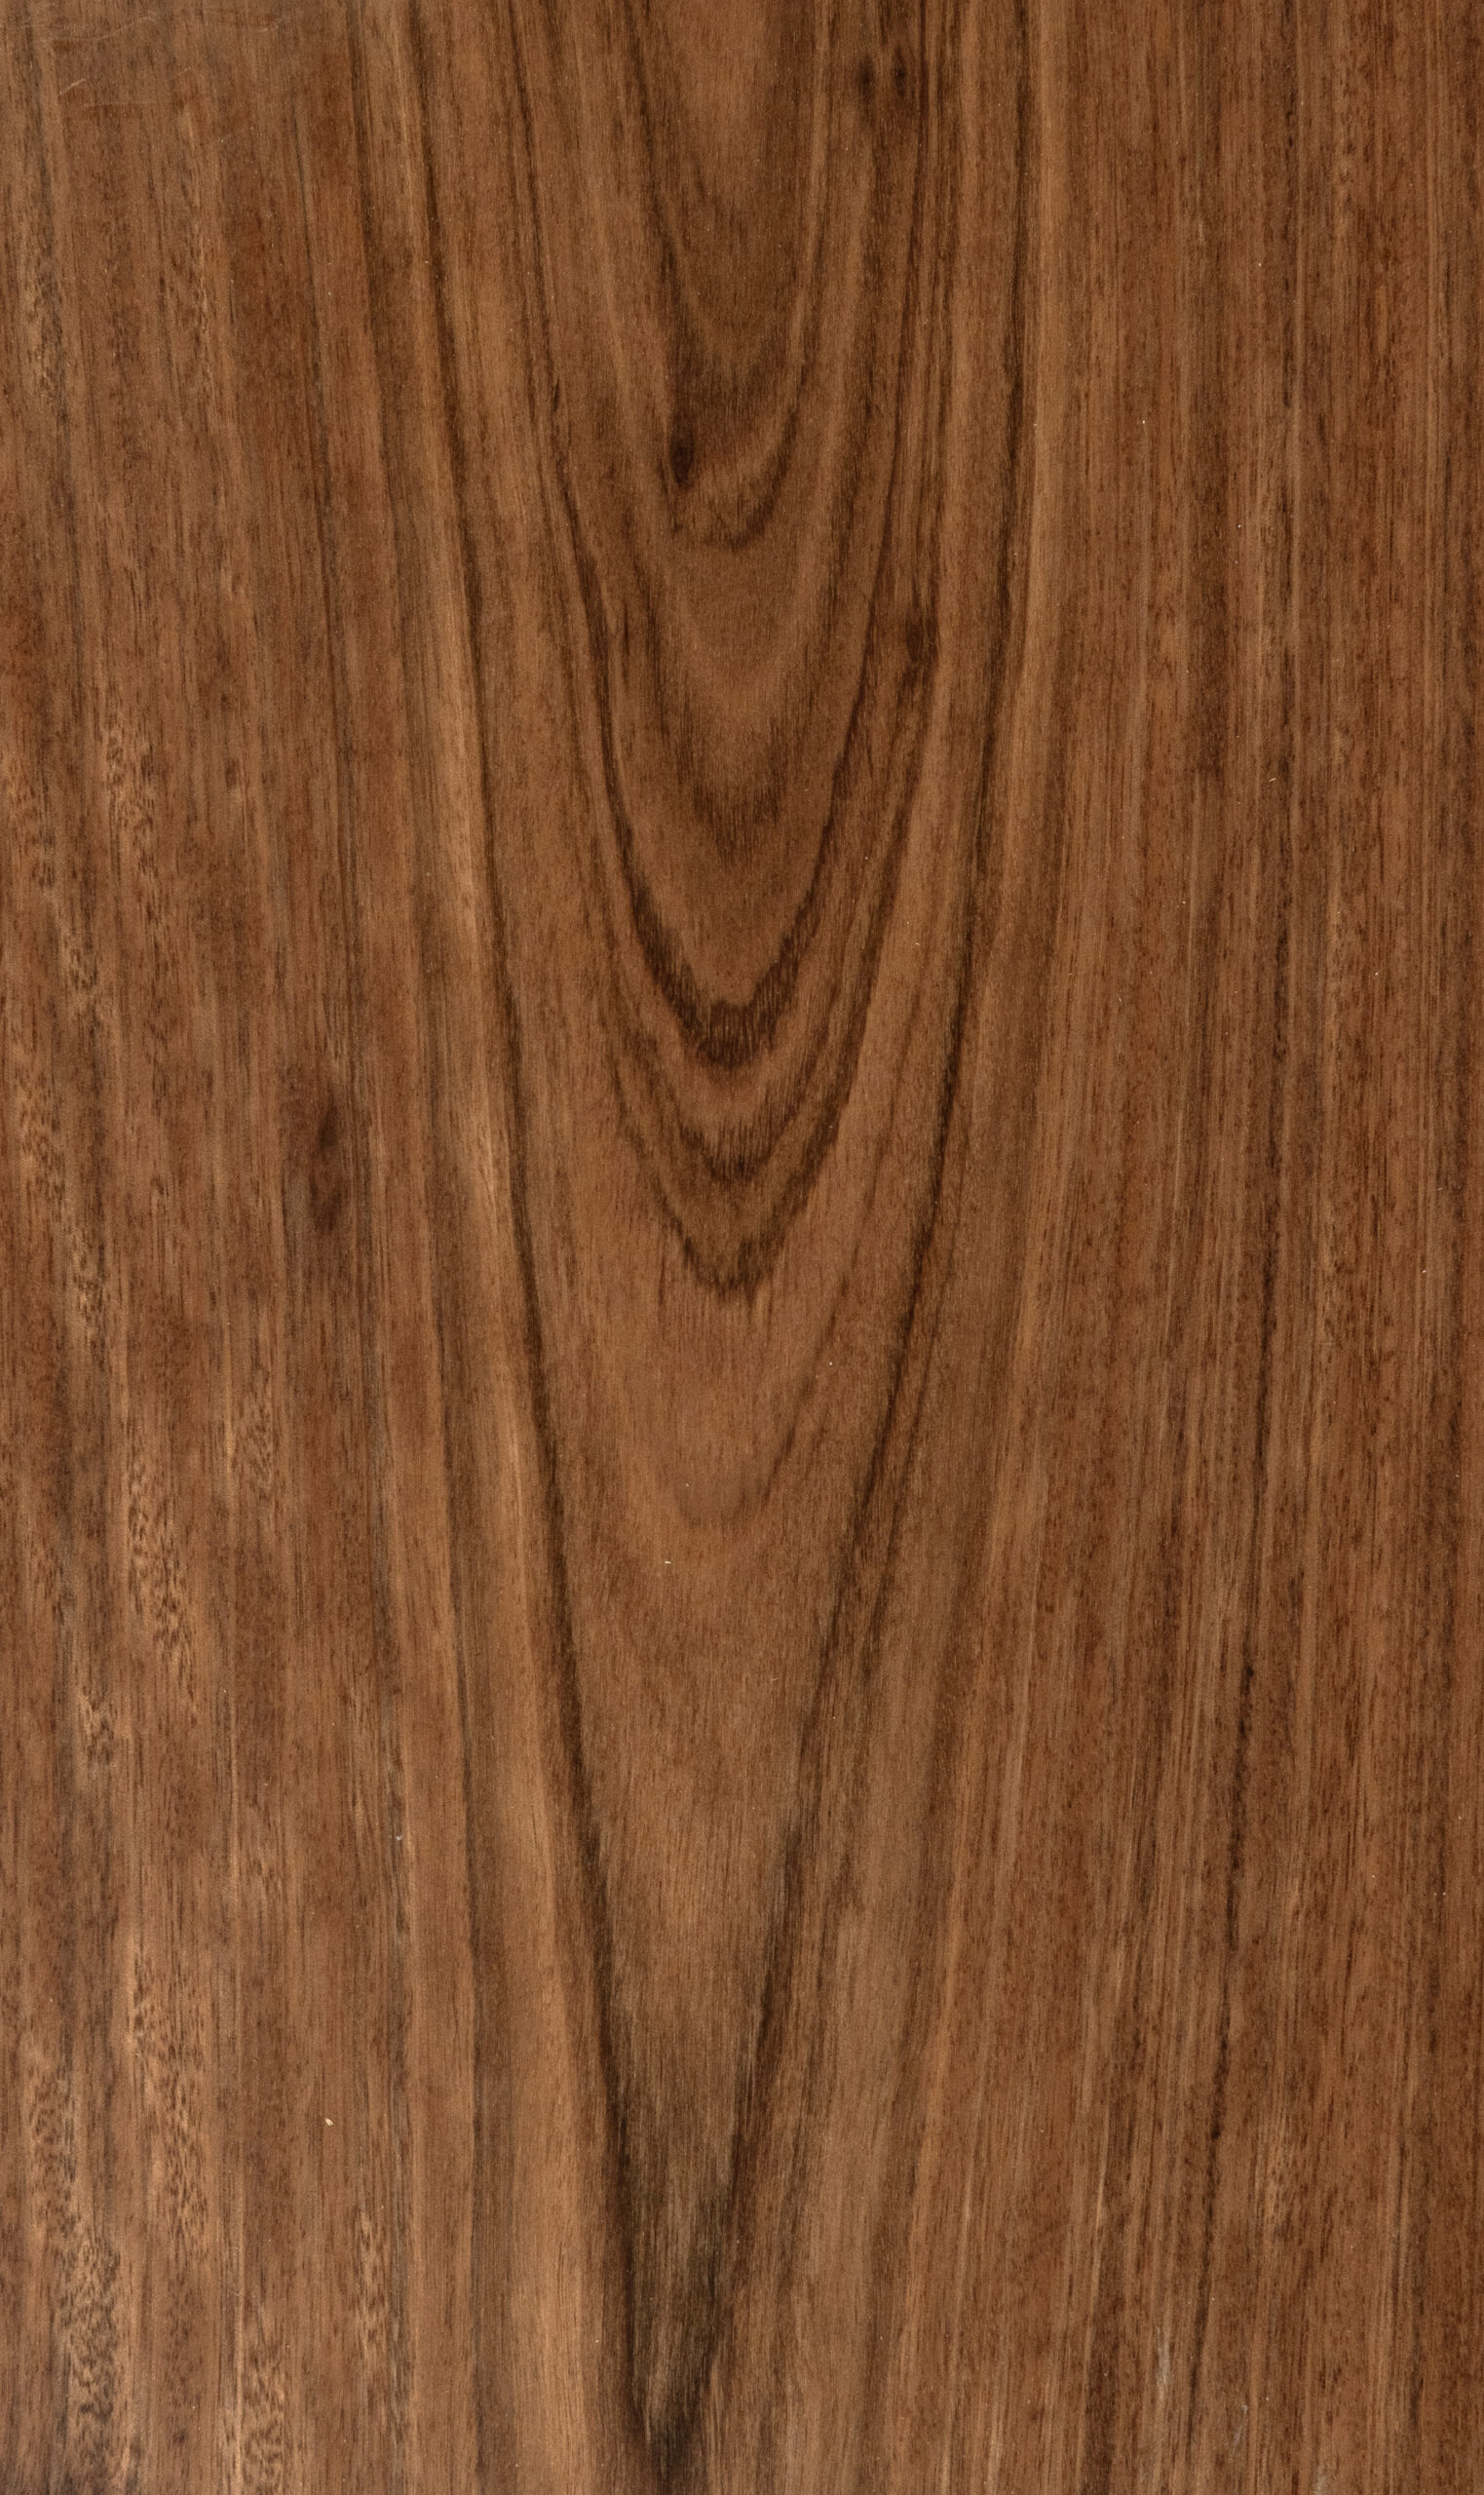 Tallow Wood flooring detail